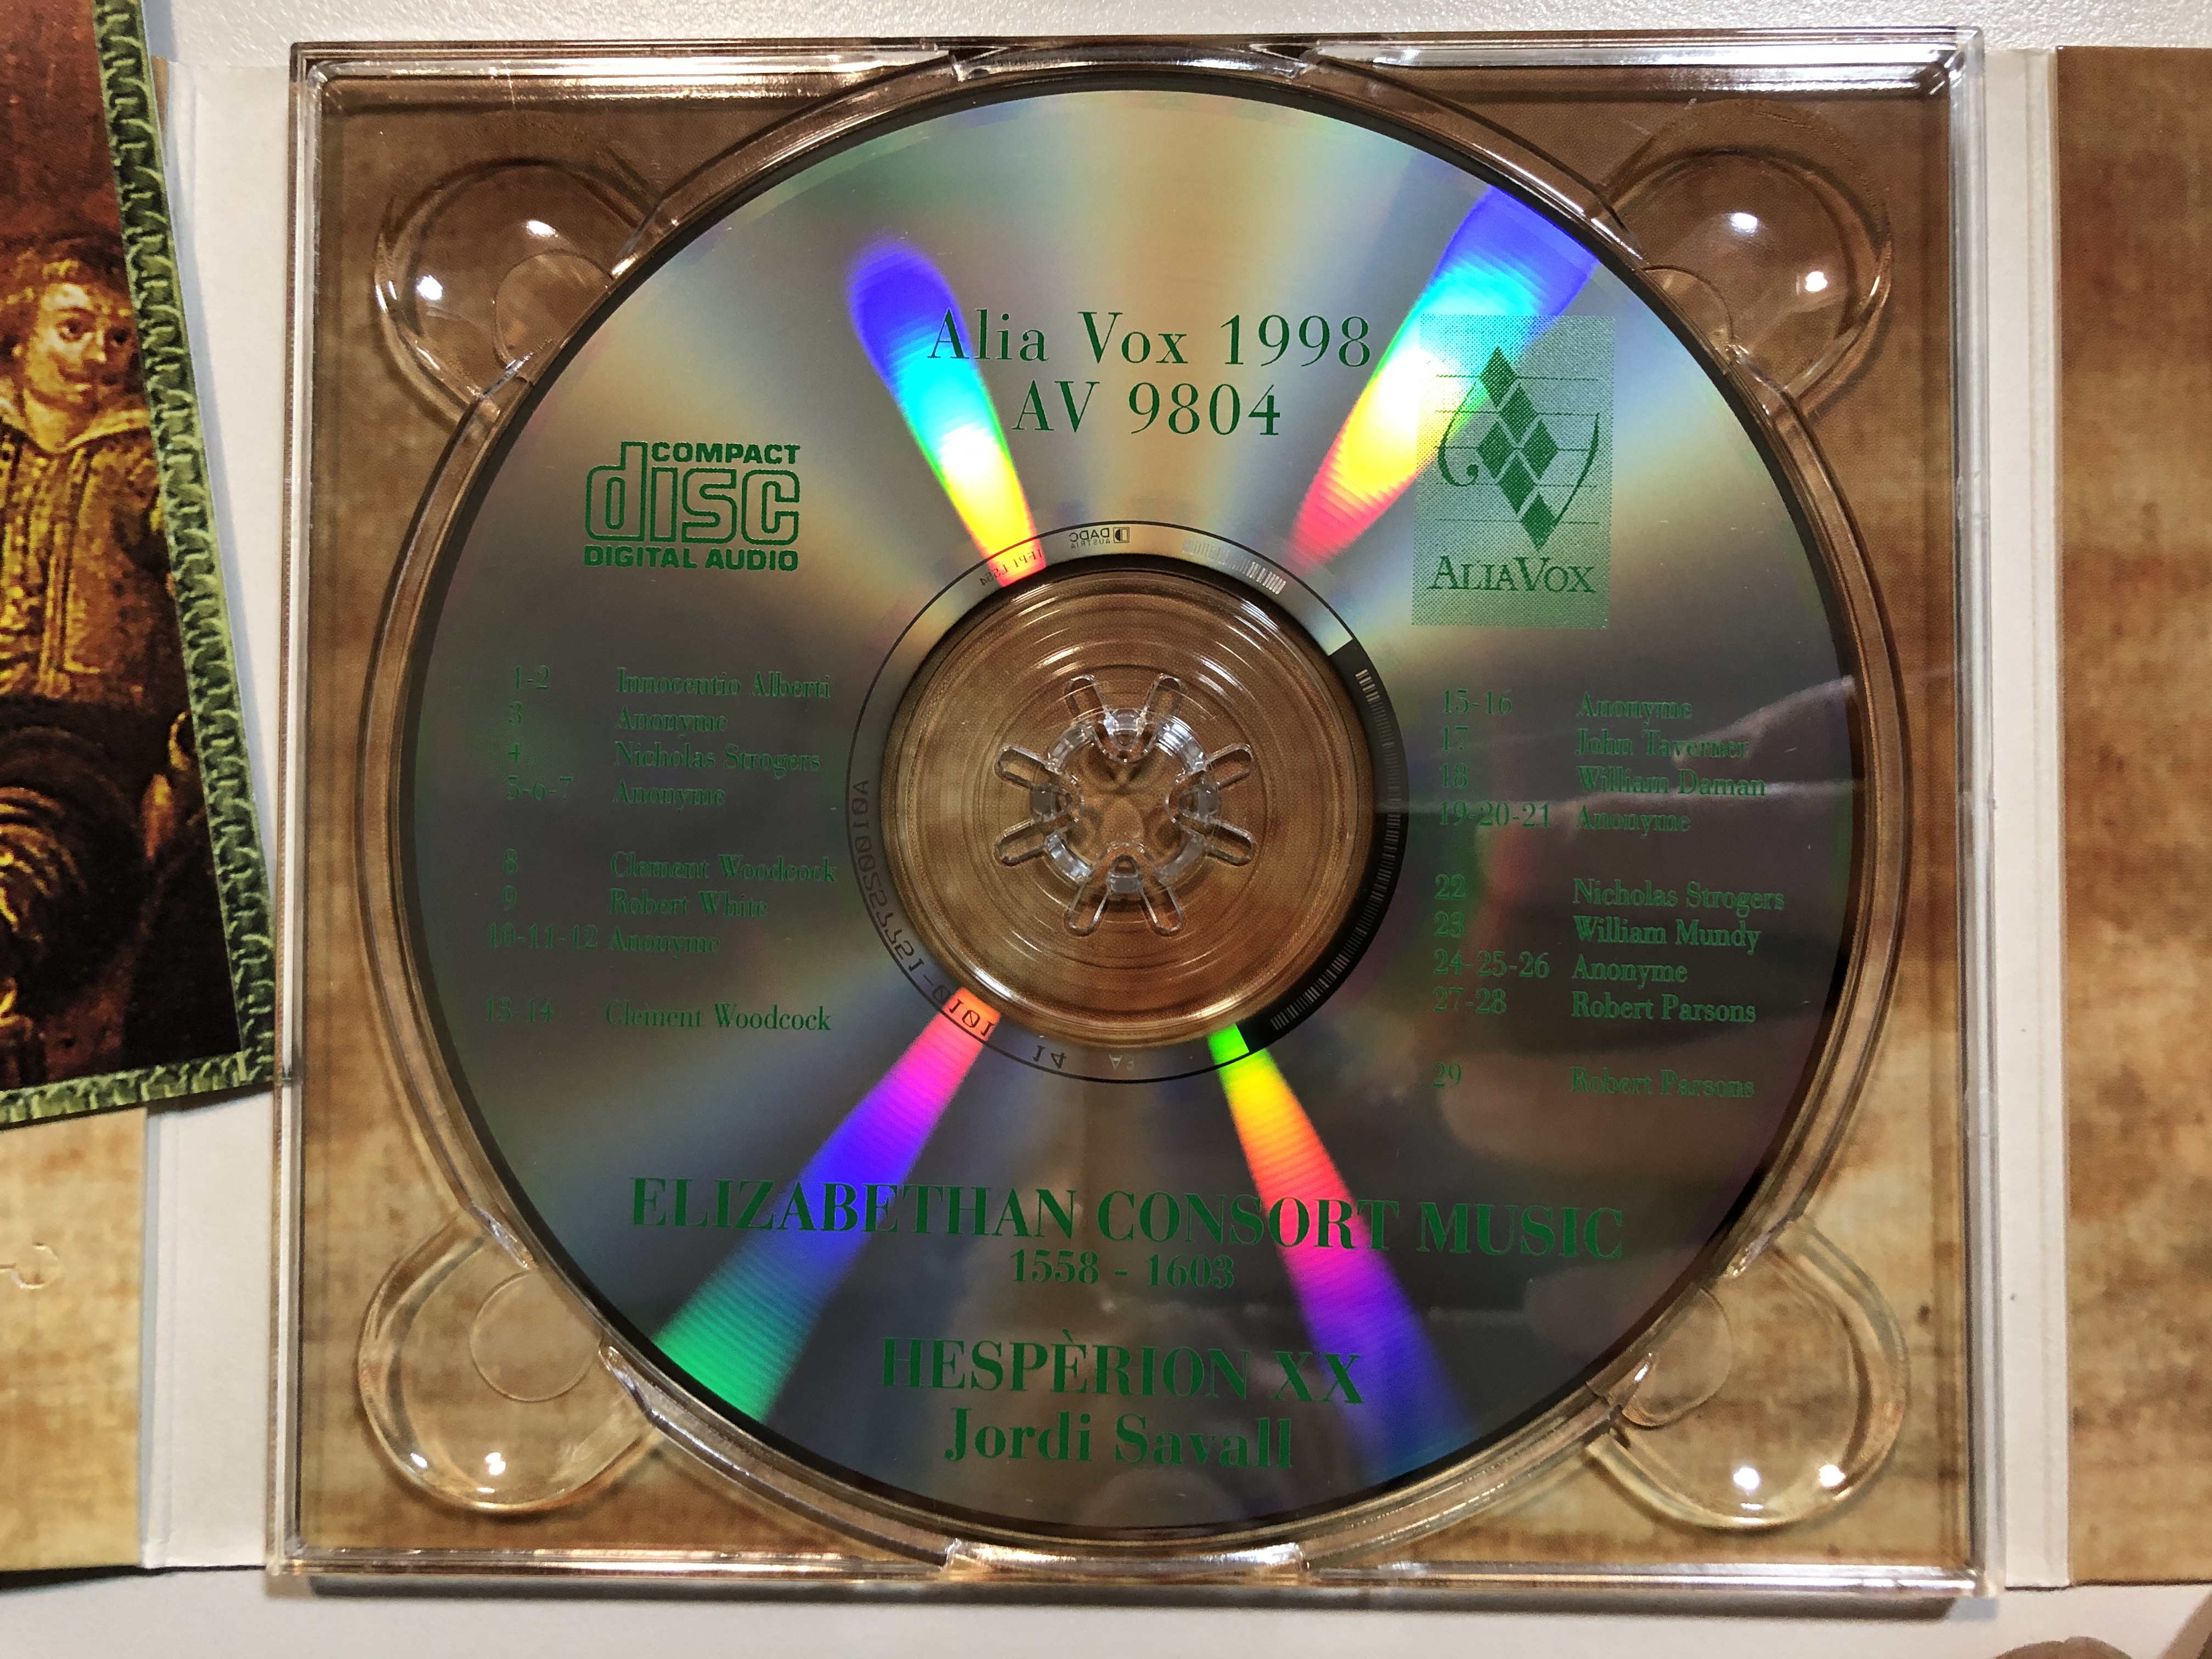 elizabethan-consort-music-1558-1603-alberti-parsons-strogers-taverner-white-woodcock-anonymes-hesp-rion-xx-jordi-savall-alia-vox-audio-cd-1998-av9804-4-.jpg